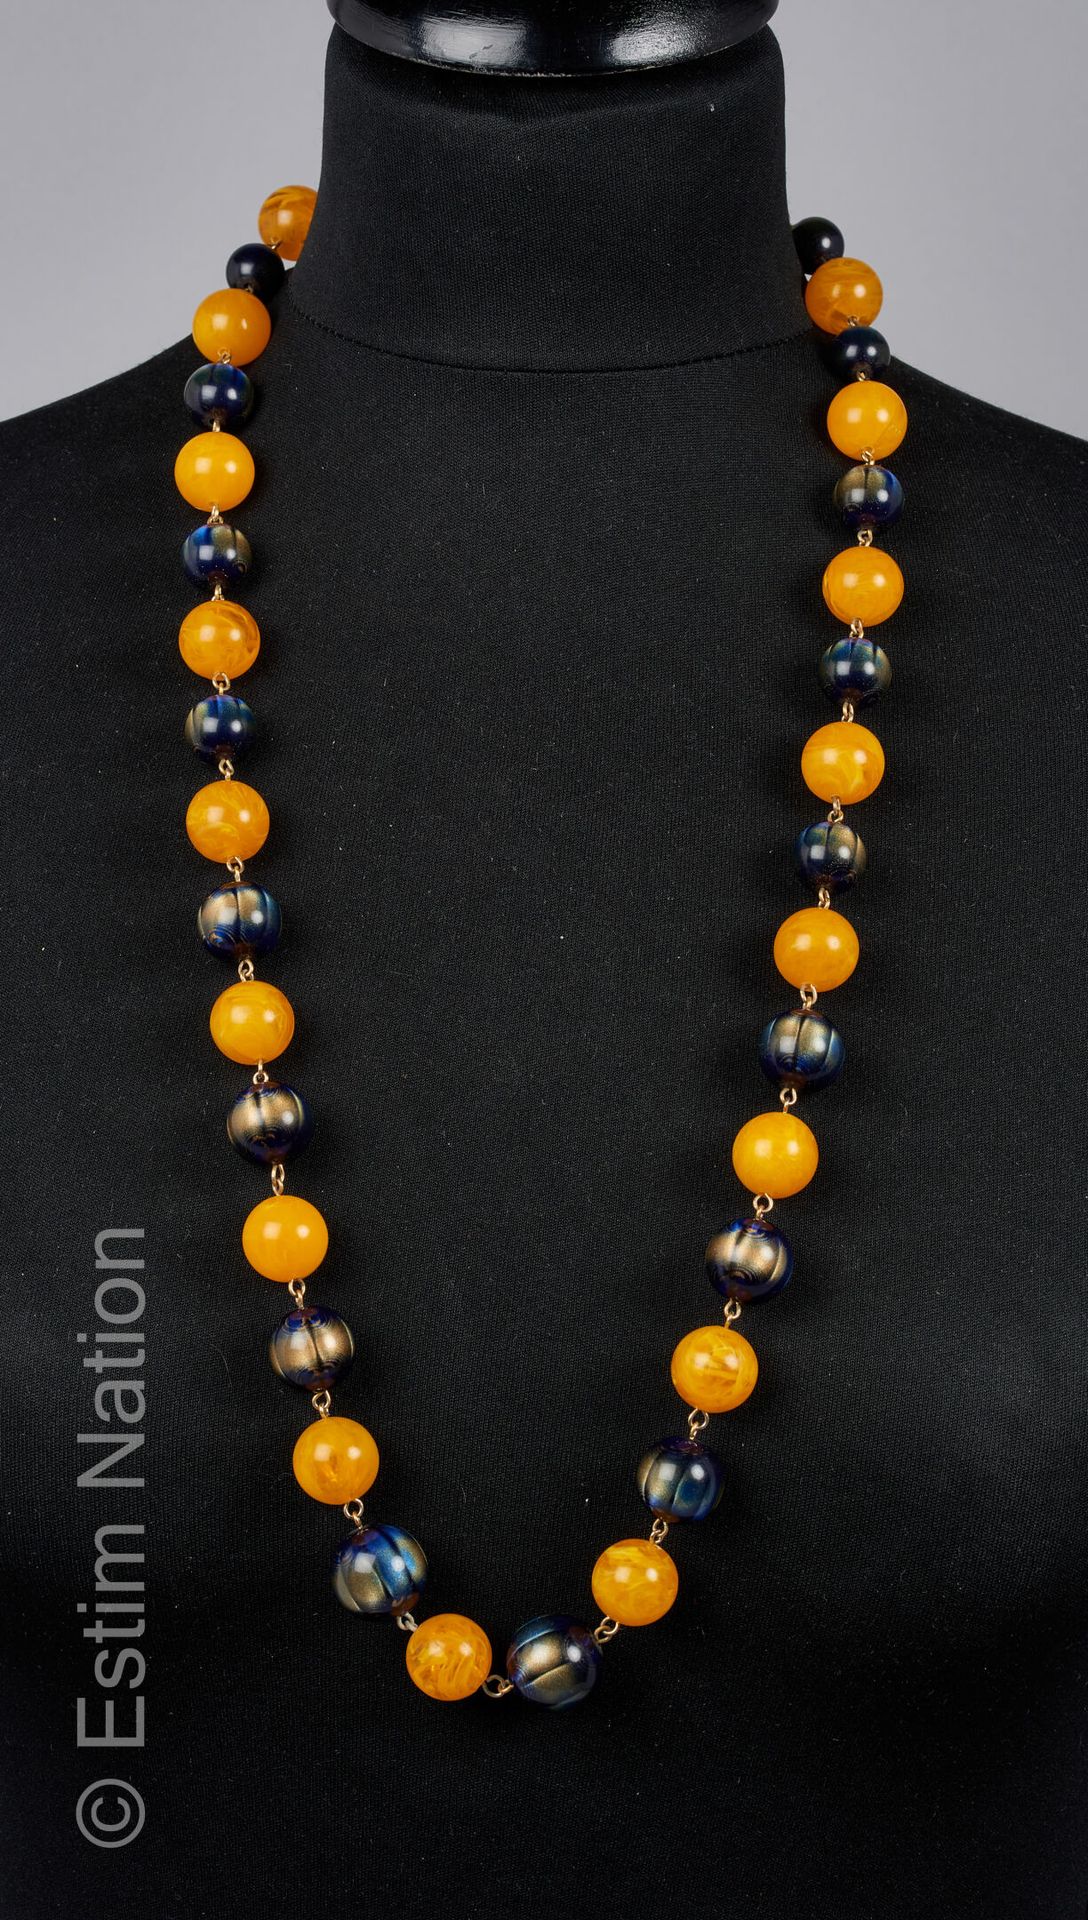 ANONYME circa 1940/50 COLLIER en perles de bakélite jaune et bleu nacré. 



Bib&hellip;